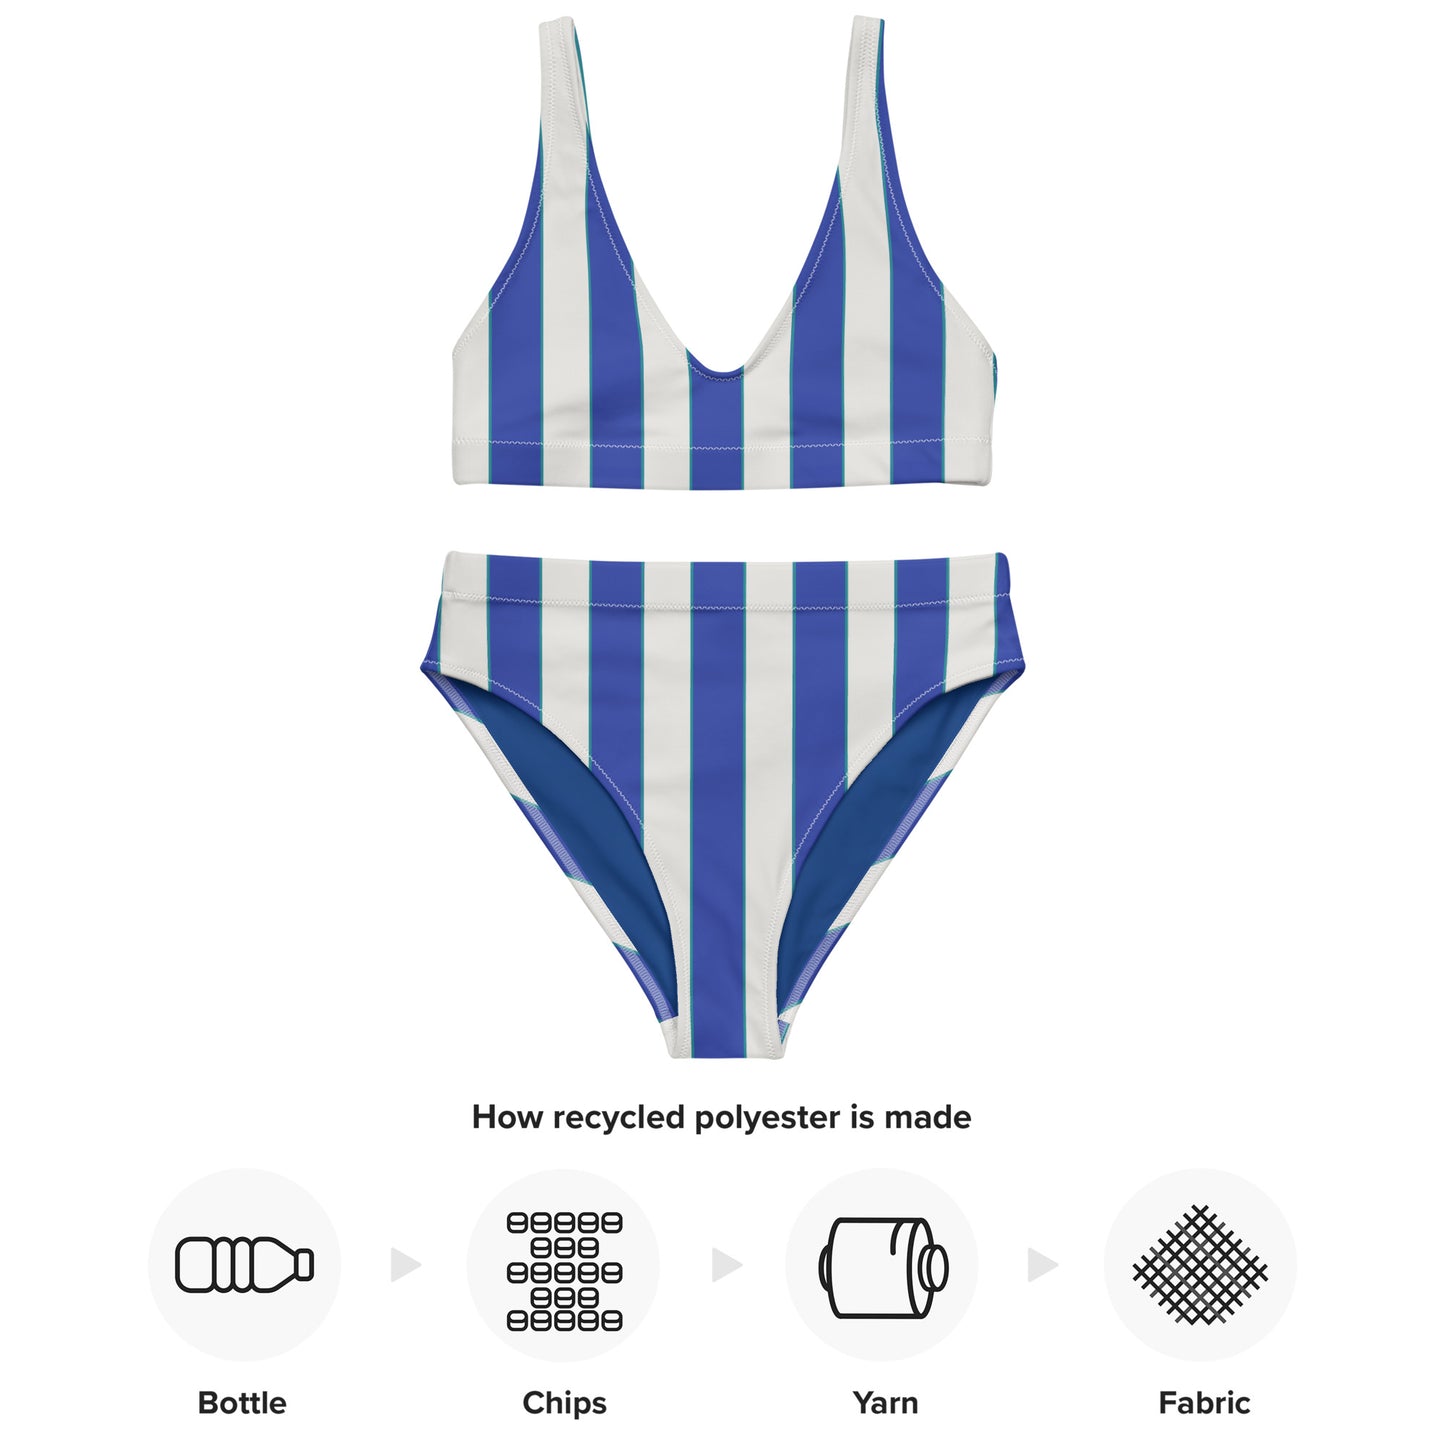 Striped Recycled high-waisted Bikini in Blue